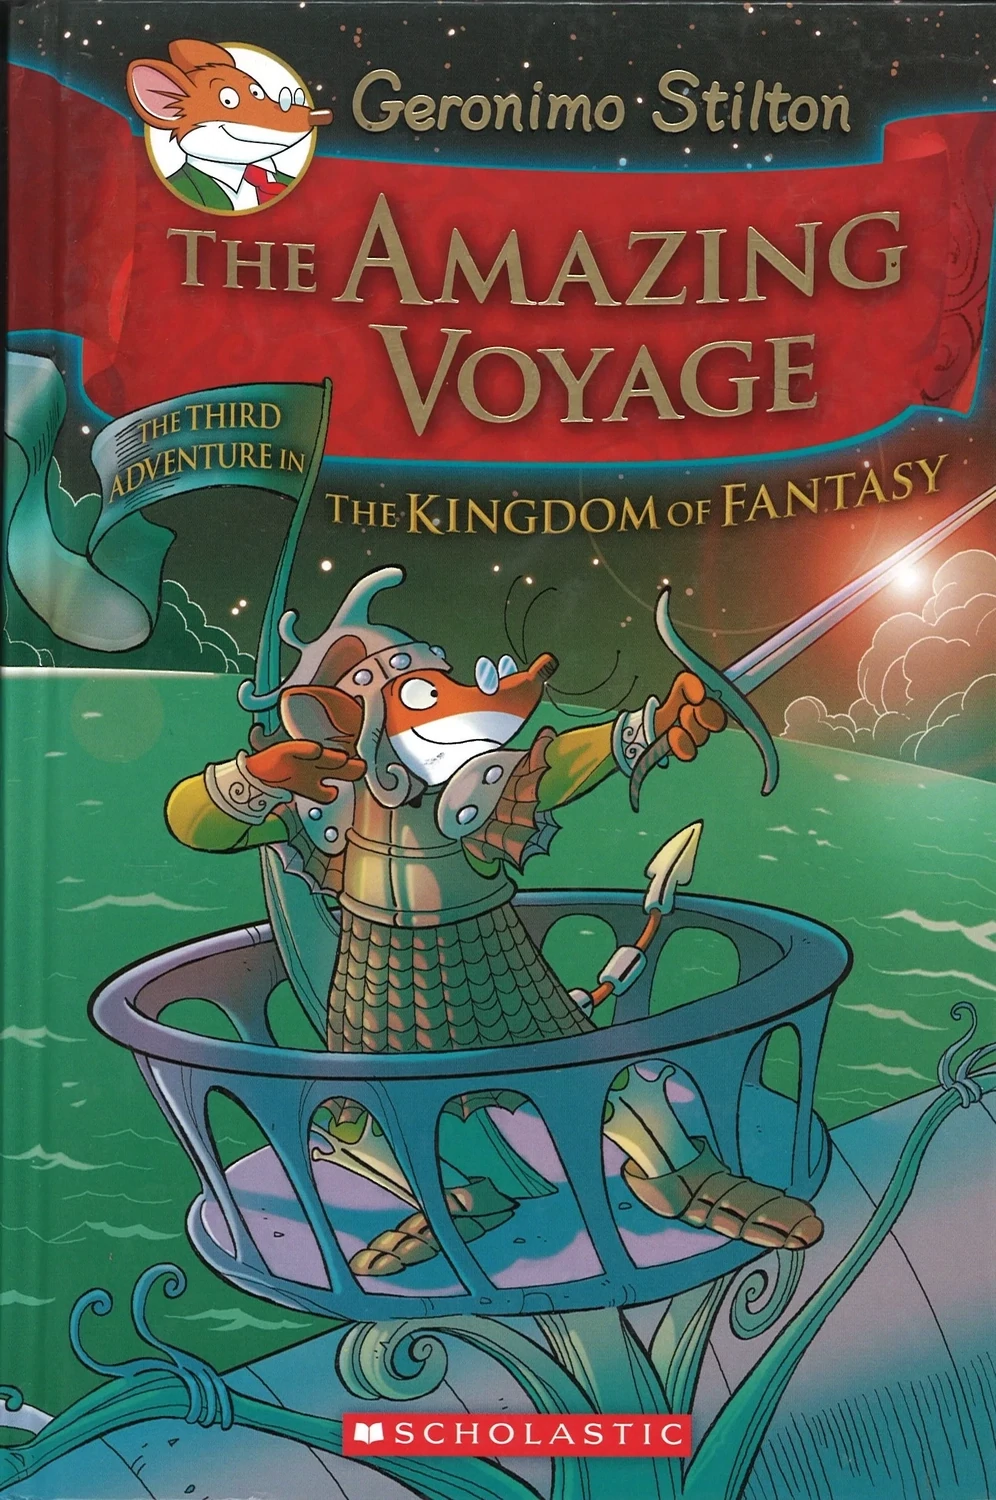 The Amazing Voyage (Kingdom of Fantasy, Book